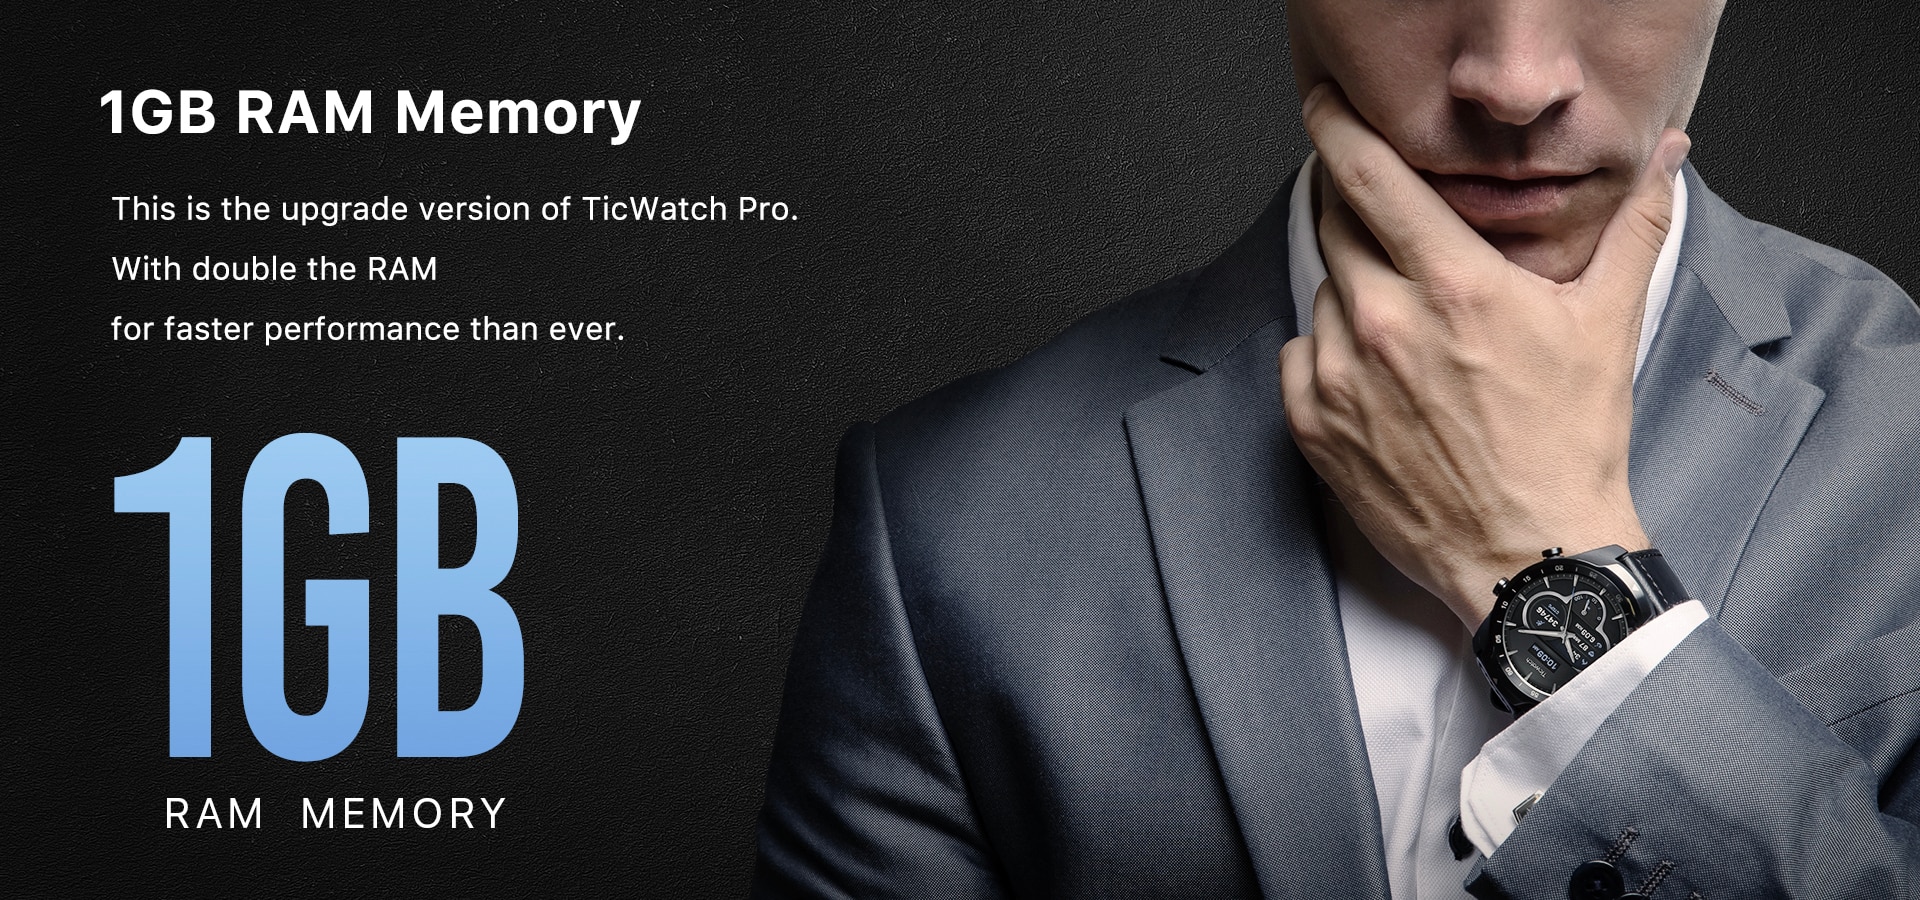 TicWatch Pro 2020 1GB RAM Smartwatch Dual Display IP68 Waterproof Watches NFC Sleep Tracking 24h Heart Rate Monitor Men's Watch